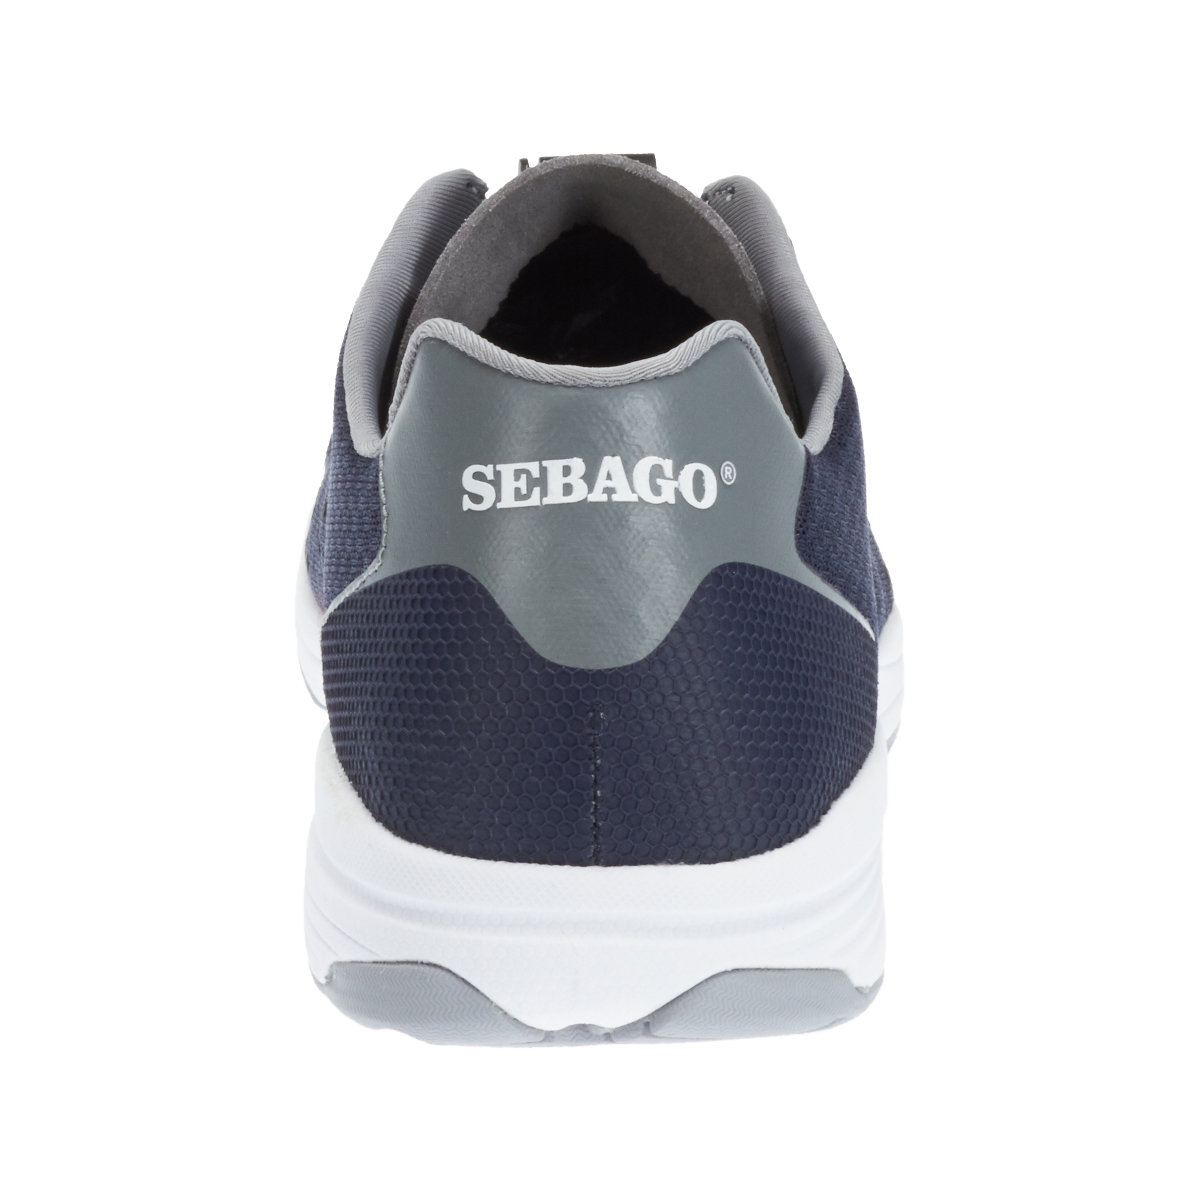 Sebago Cyphon Sea Sport chaussures à voile homme navy, taille EU 43 (US 9)